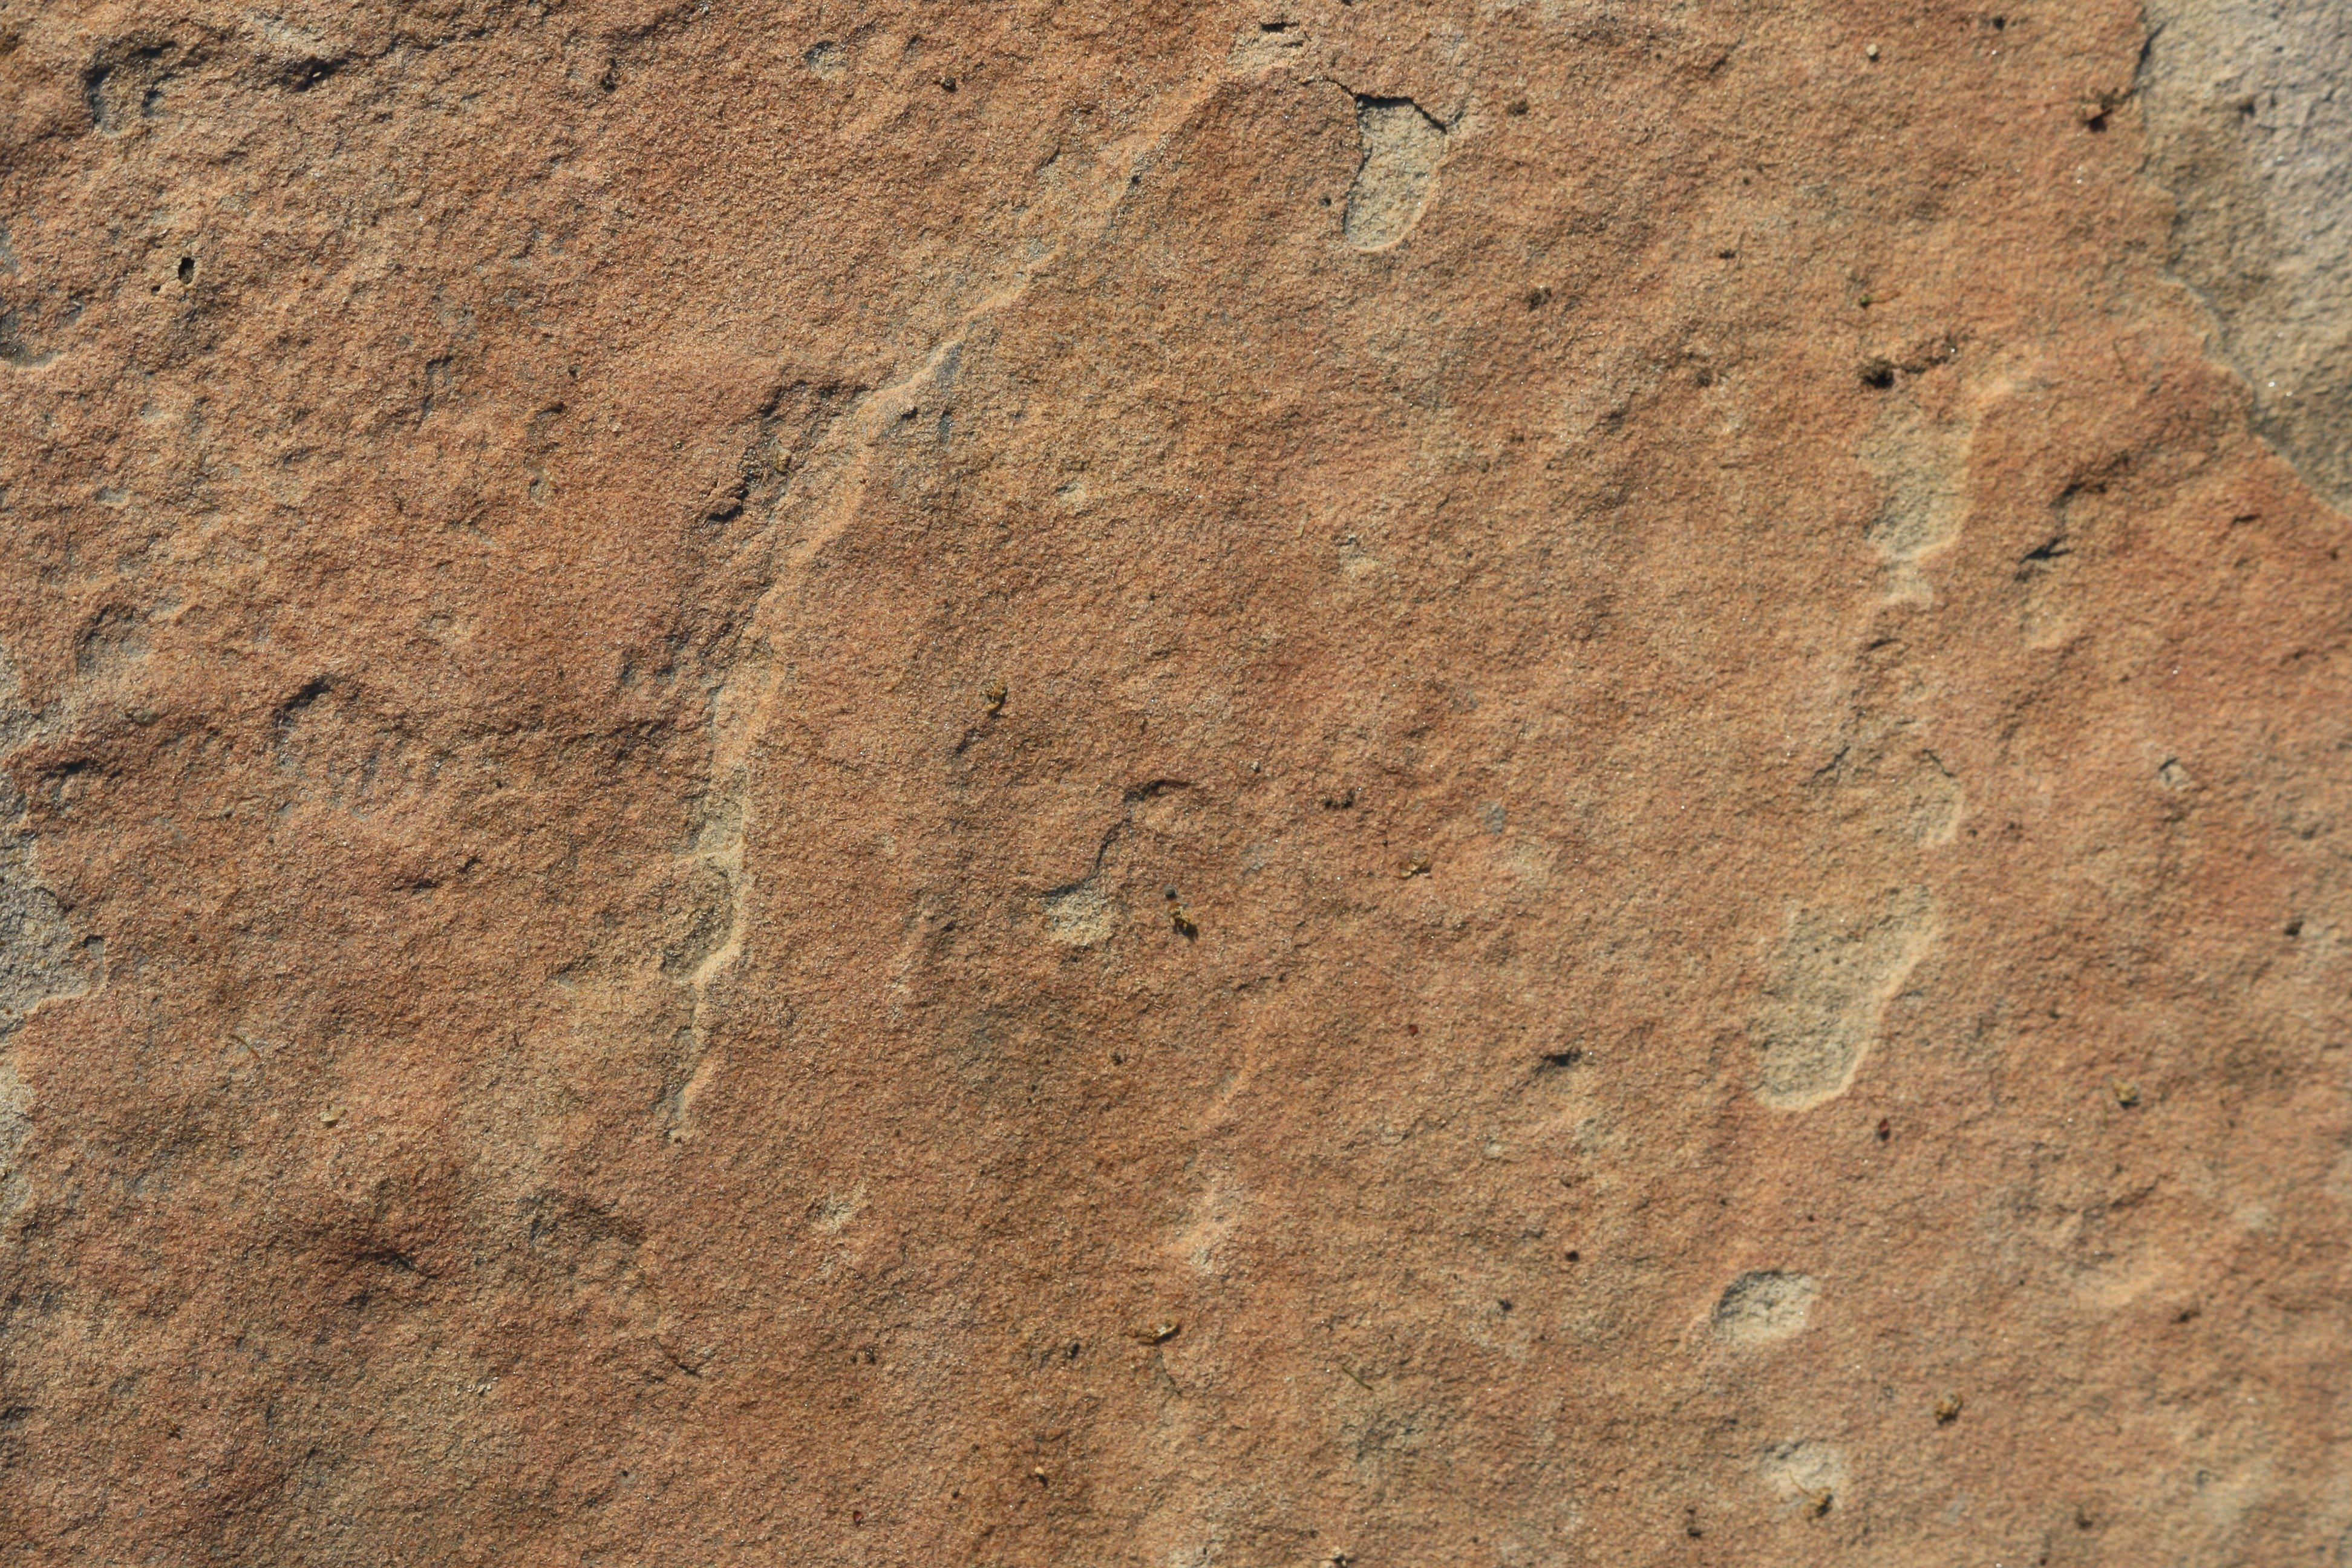 Sandstone Rock Texture Picture. Free Photograph. Photo